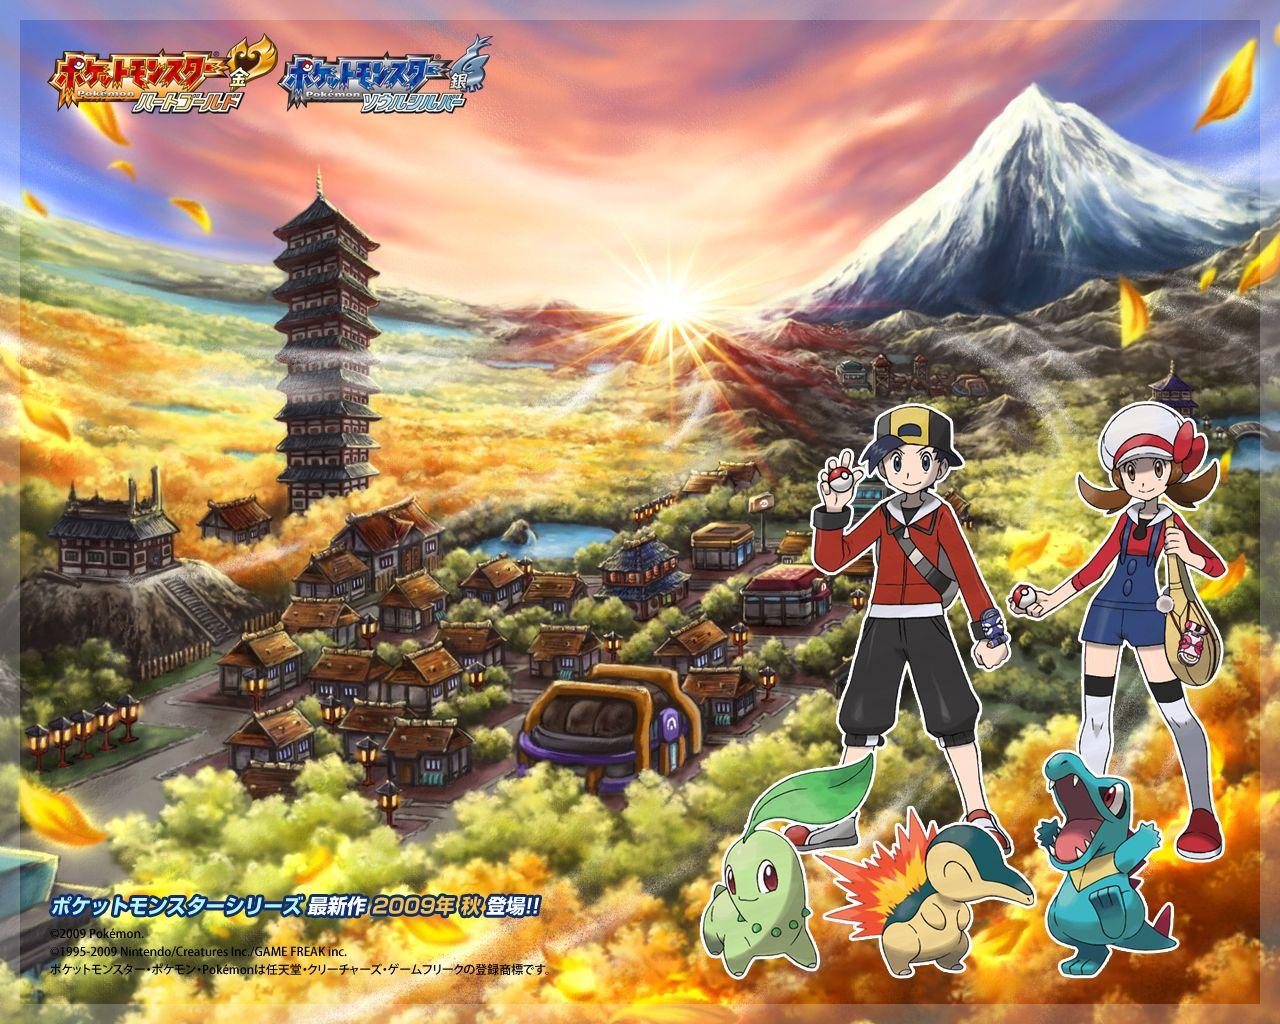 Video Game Pokémon: HeartGold and SoulSilver HD Wallpaper